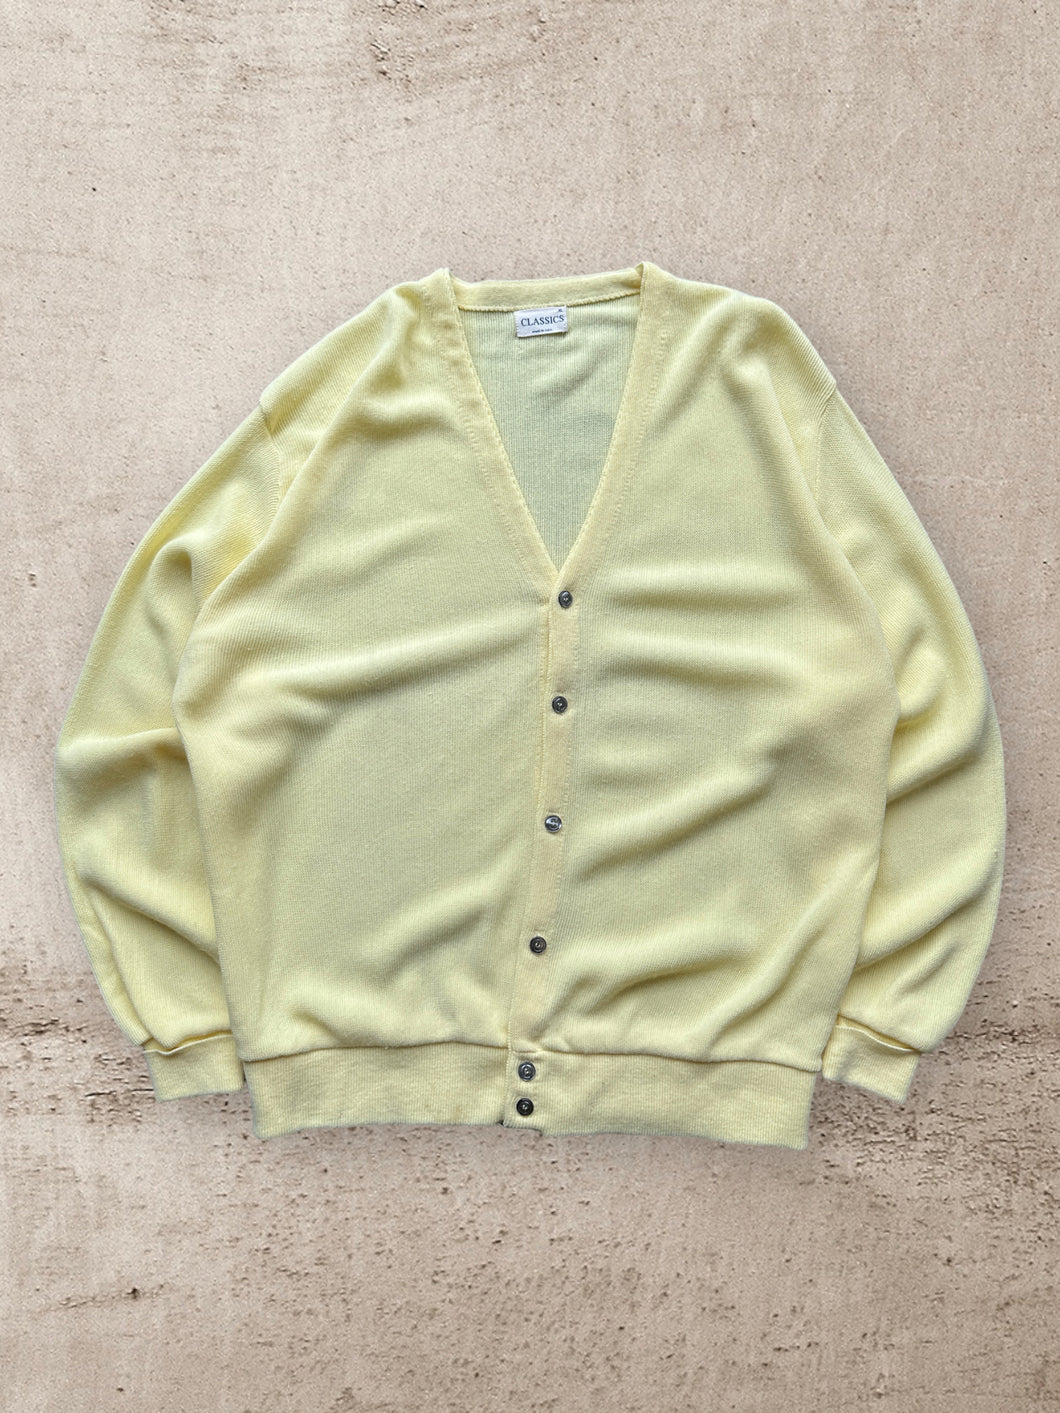 Vintage Yellow Knit Cardigan - XL